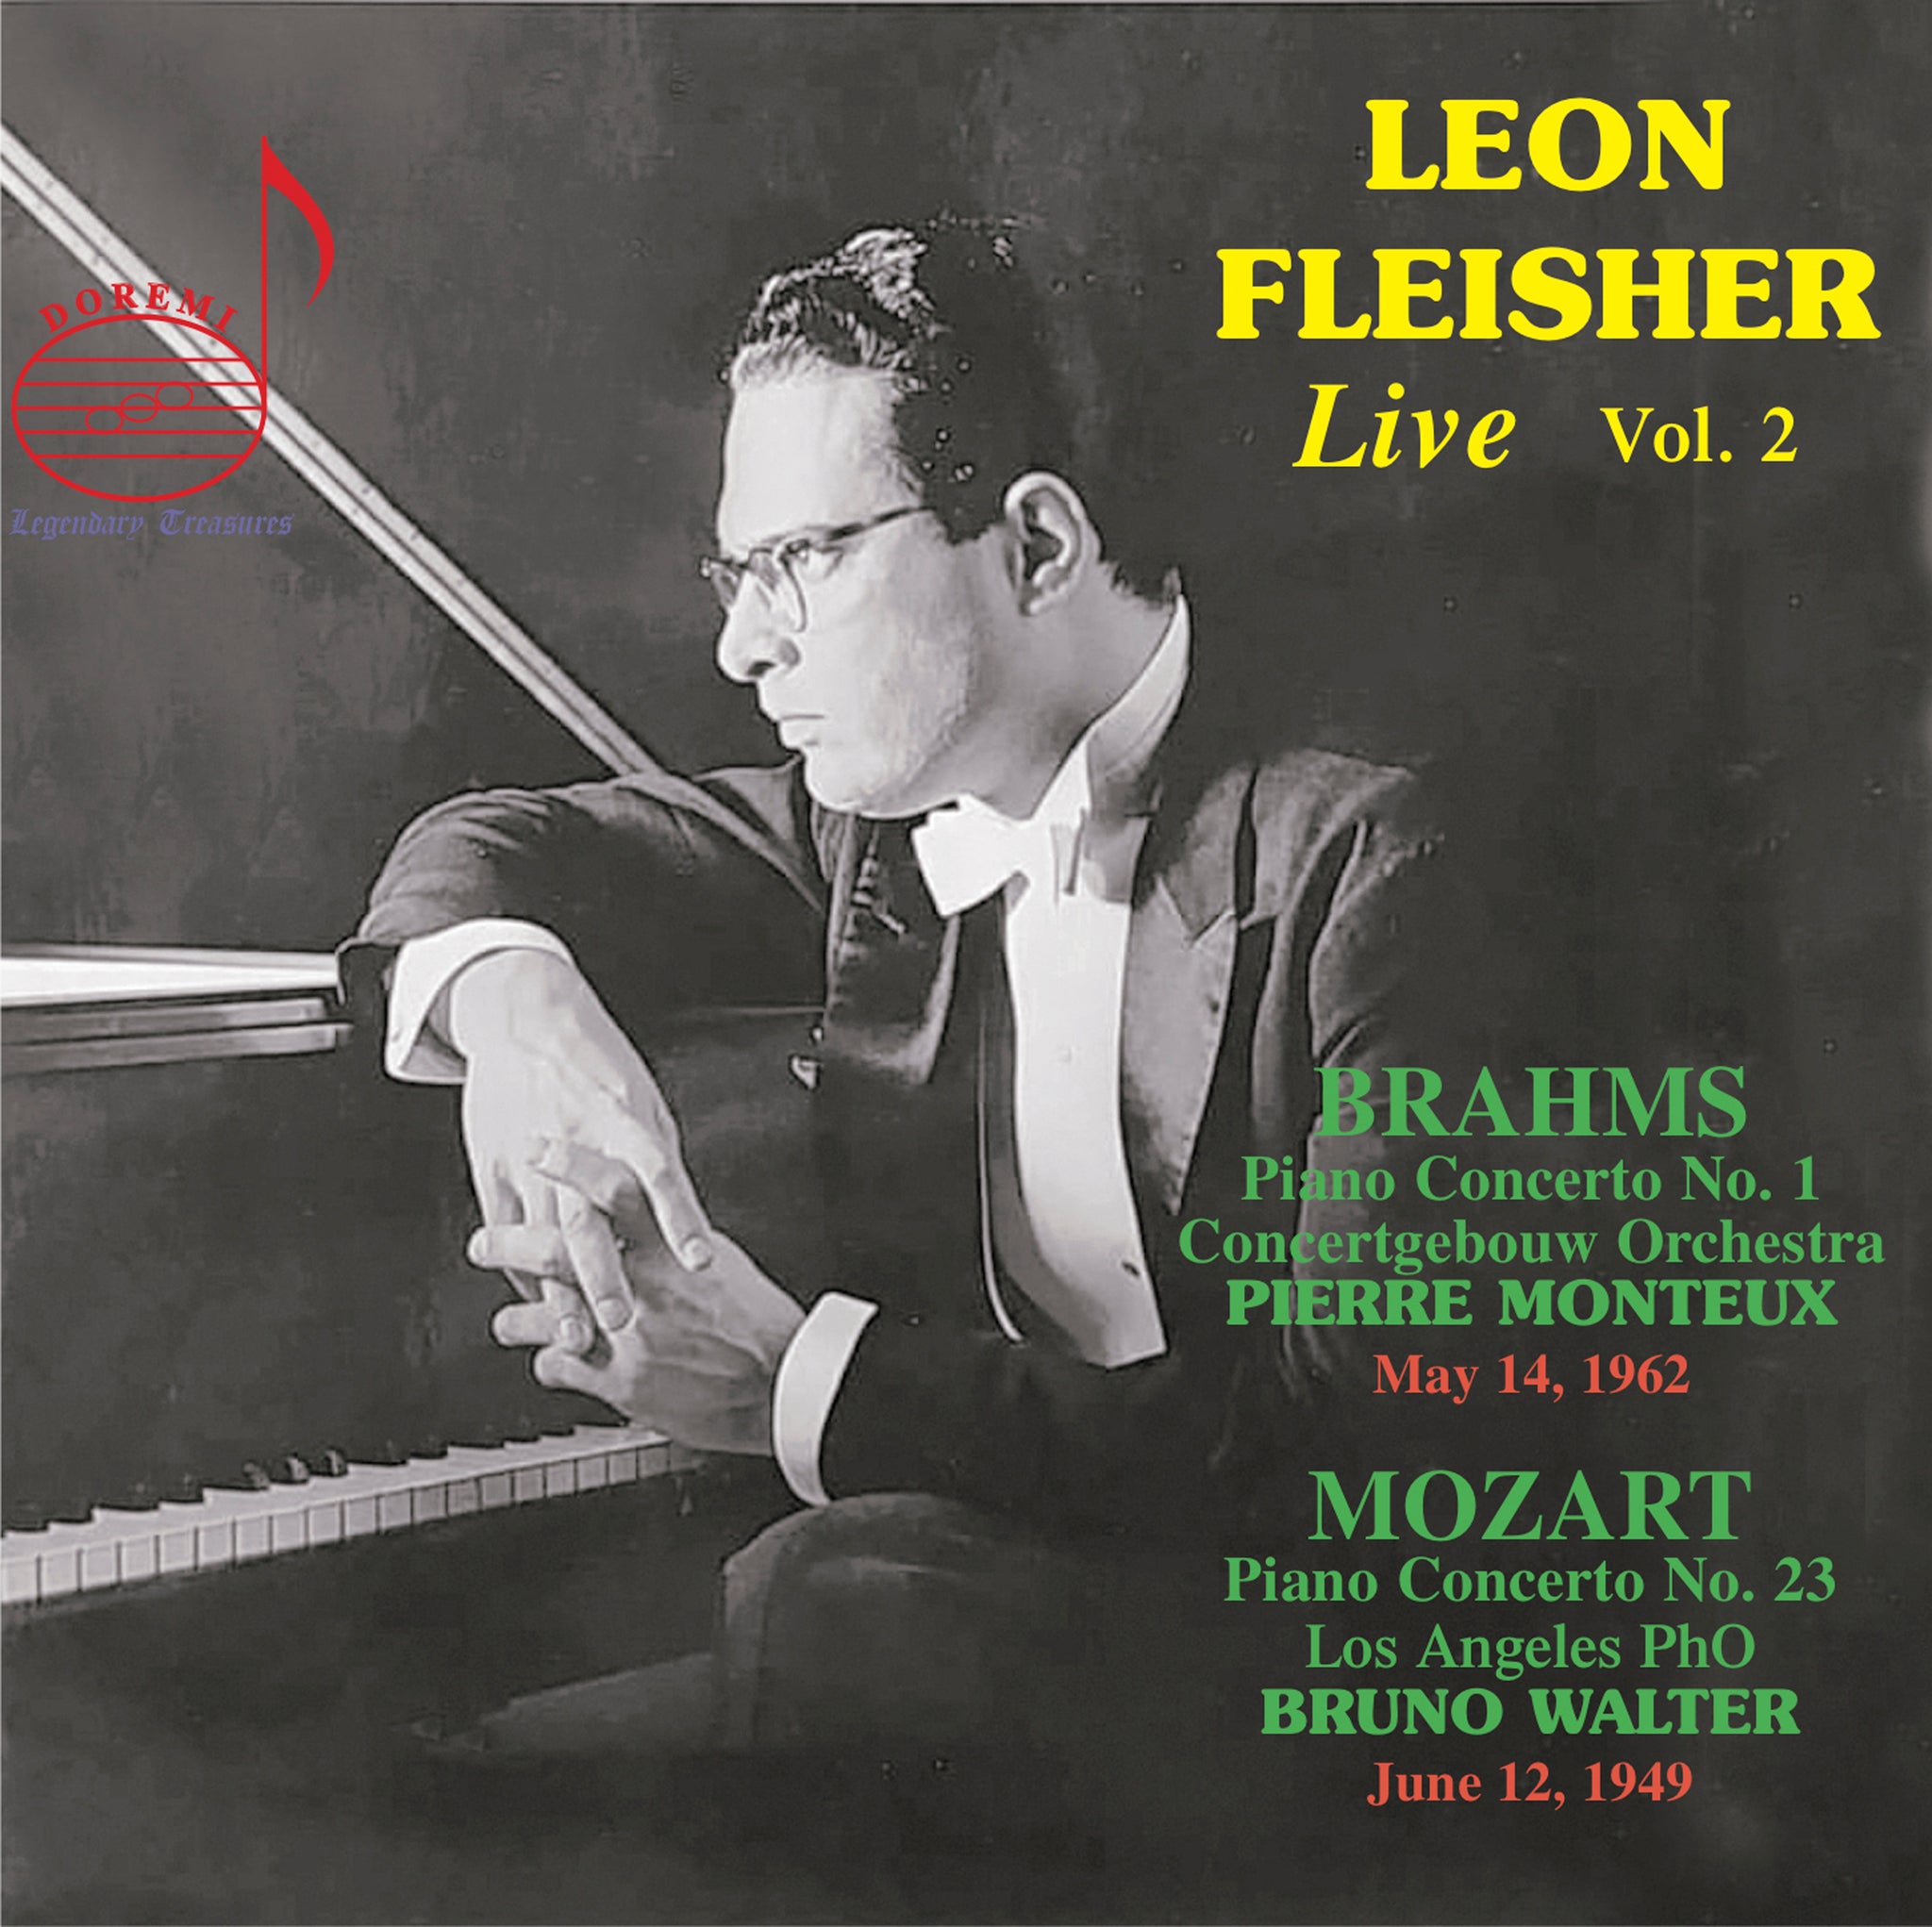 Brahms & Mozart: Leon Fleisher Live, Vol. 2 / Monteux, Concertgebouw Orchestra, Walter, Los Angeles Philharmonic Orchestra